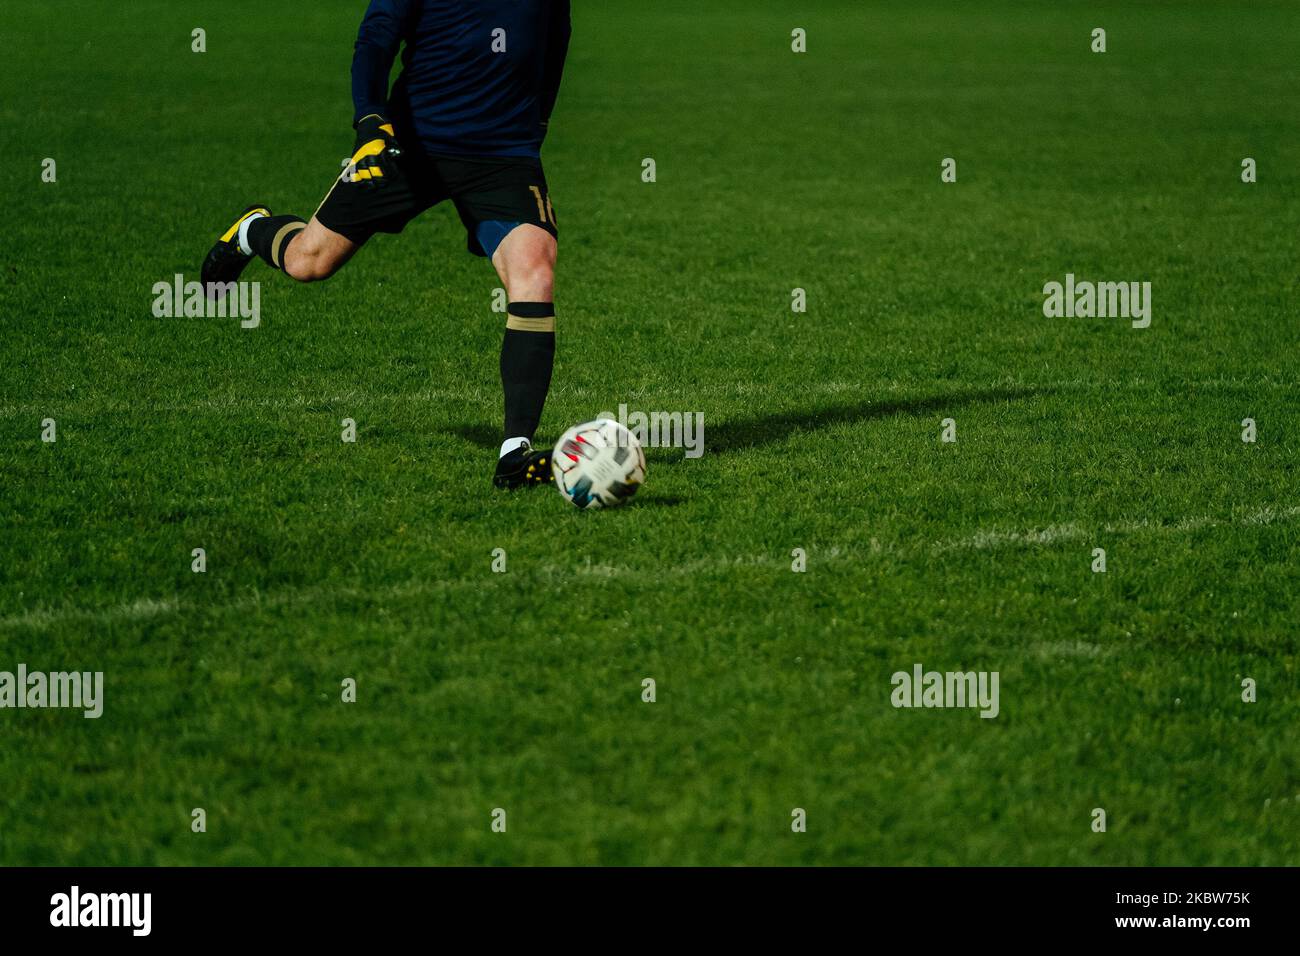 goalkeeper kick ball during football match Stock Photo